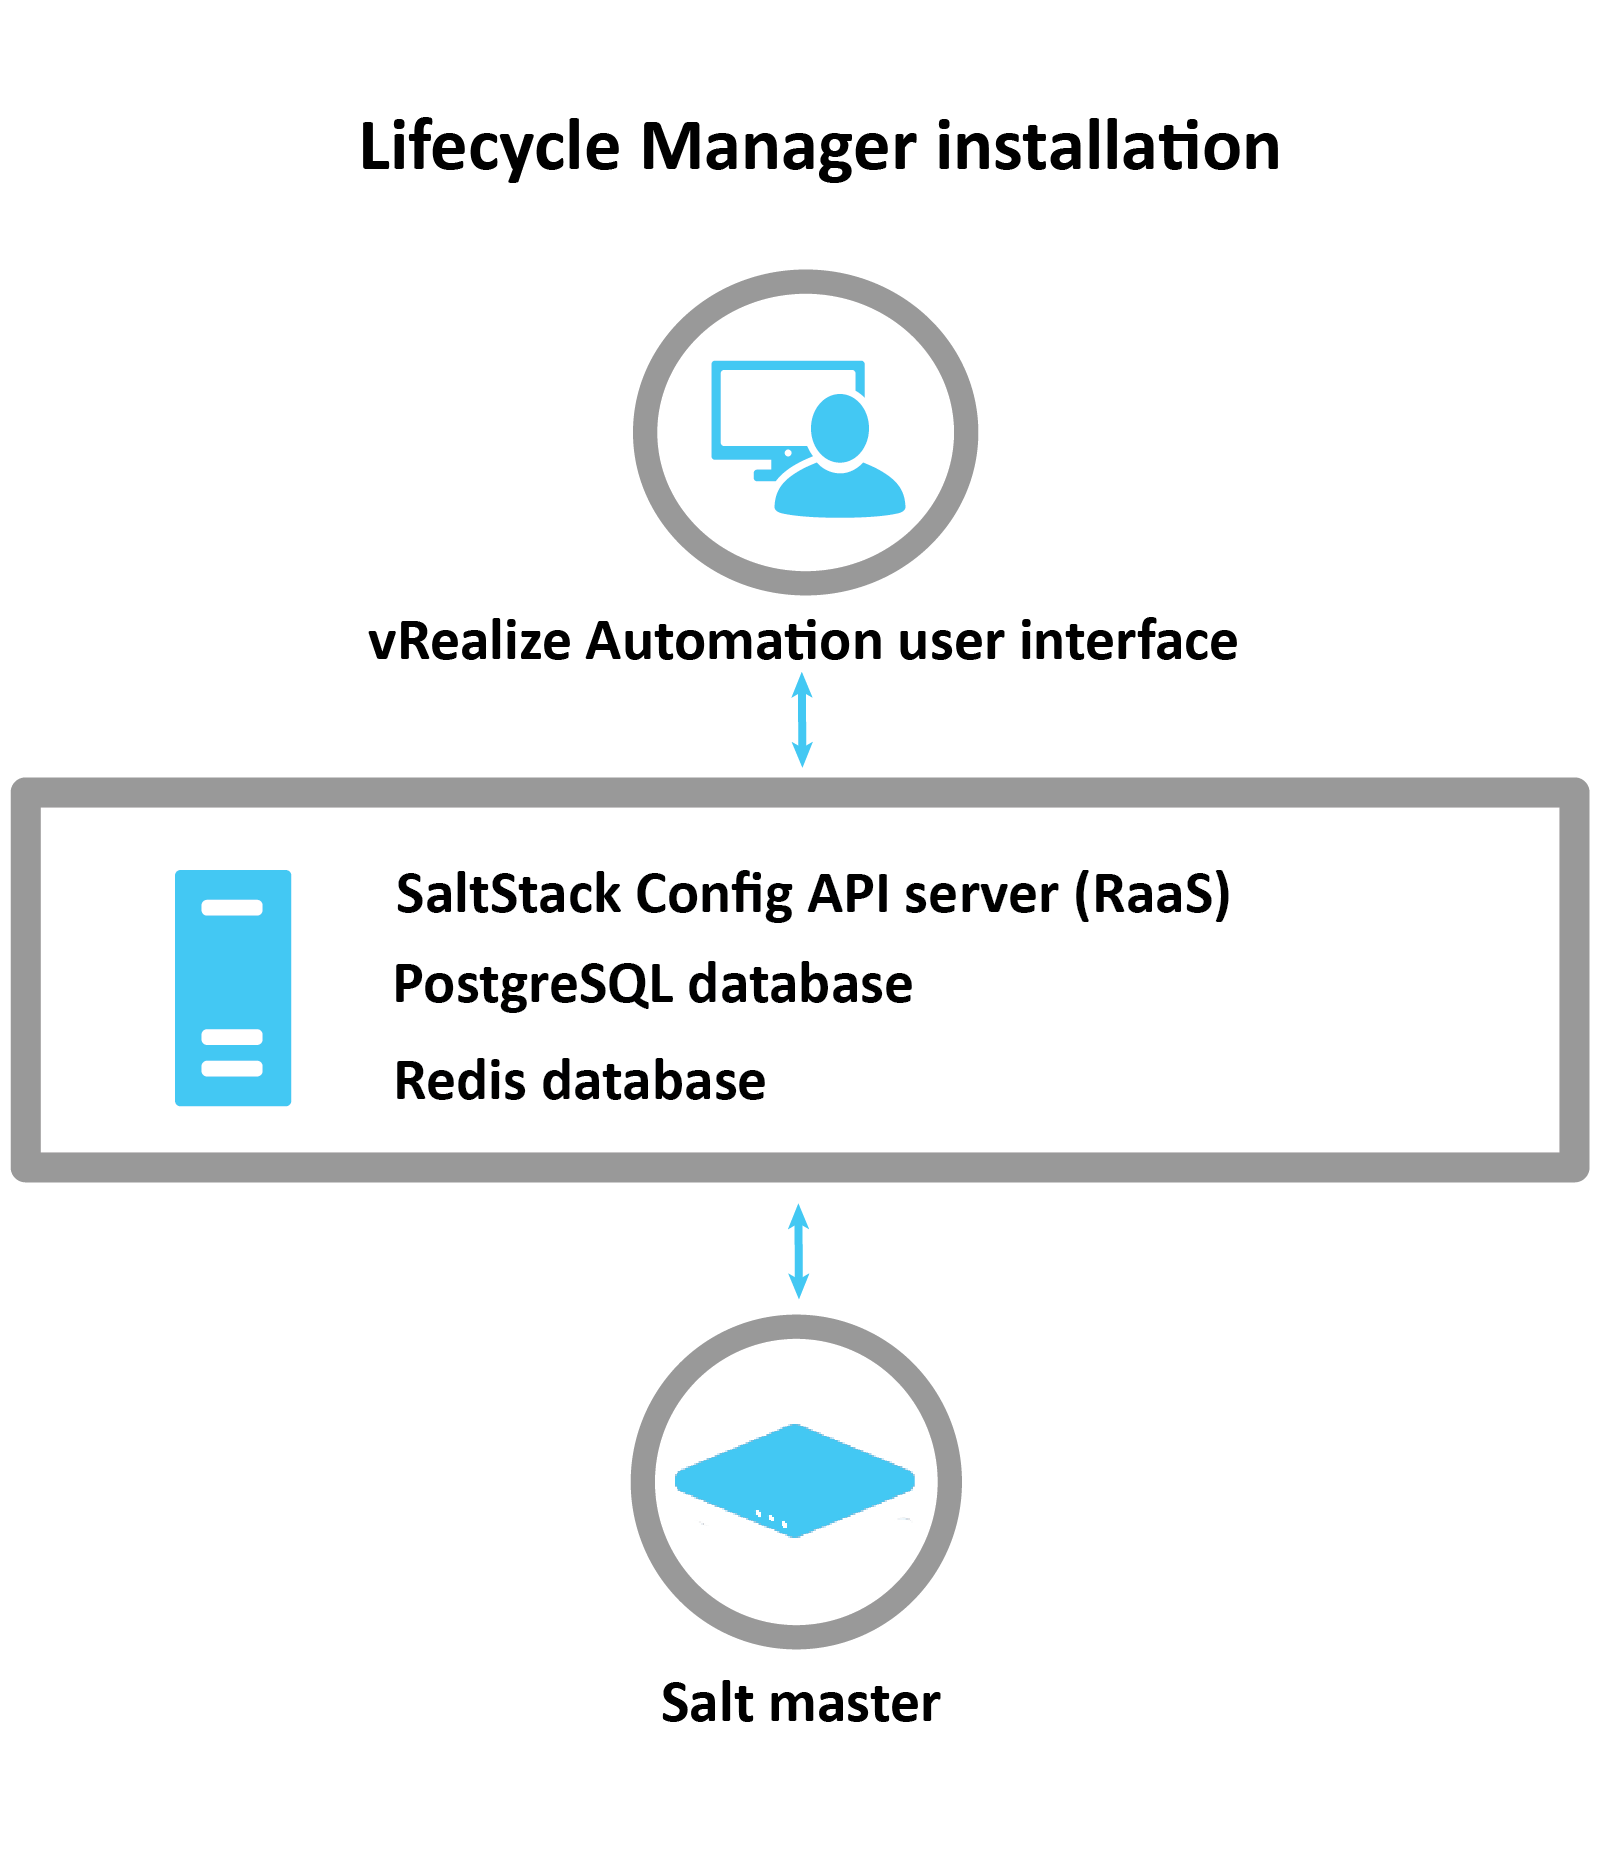 LCM을 통해 SaltStack Config를 설치하는 방법을 설명하는 다이어그램: LCM은 vRA 인터페이스를 사용하여 RaaS 서버, Postgres 데이터베이스 및 Redis 데이터베이스를 설치합니다. 설치가 완료되면 Salt 마스터가 구성됩니다.